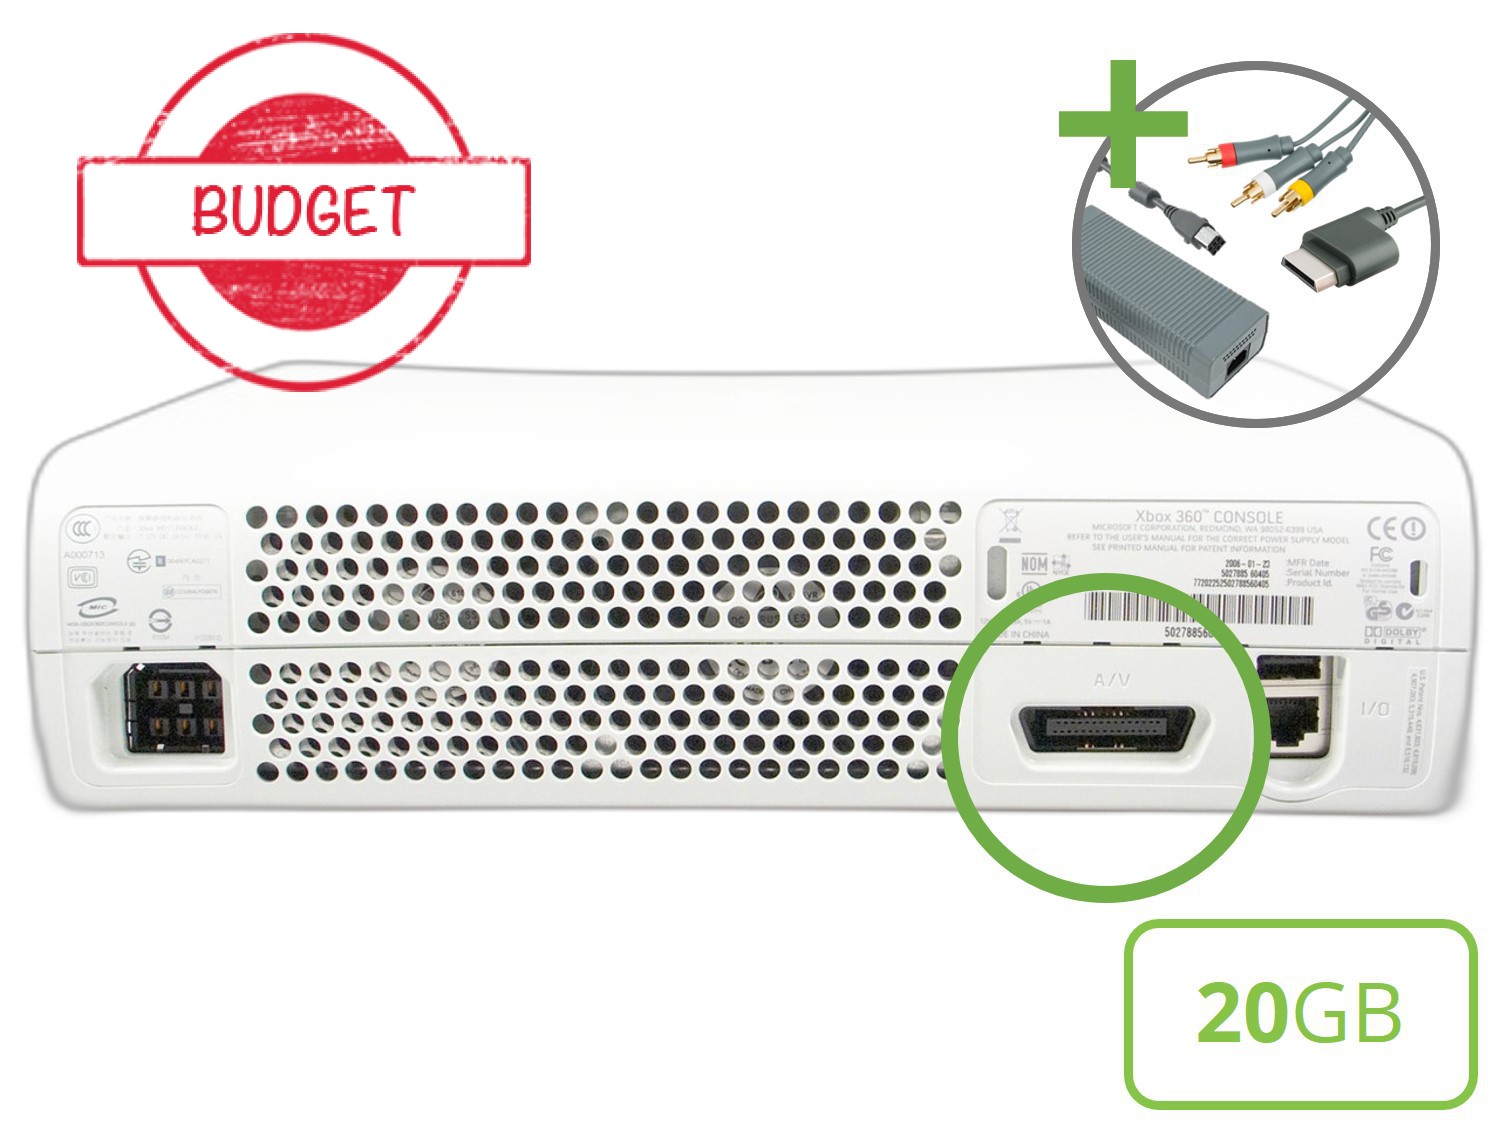 Microsoft Xbox 360 Premium Starter Pack - 20GB Basic Gold Edition - Budget - Xbox 360 Hardware - 3